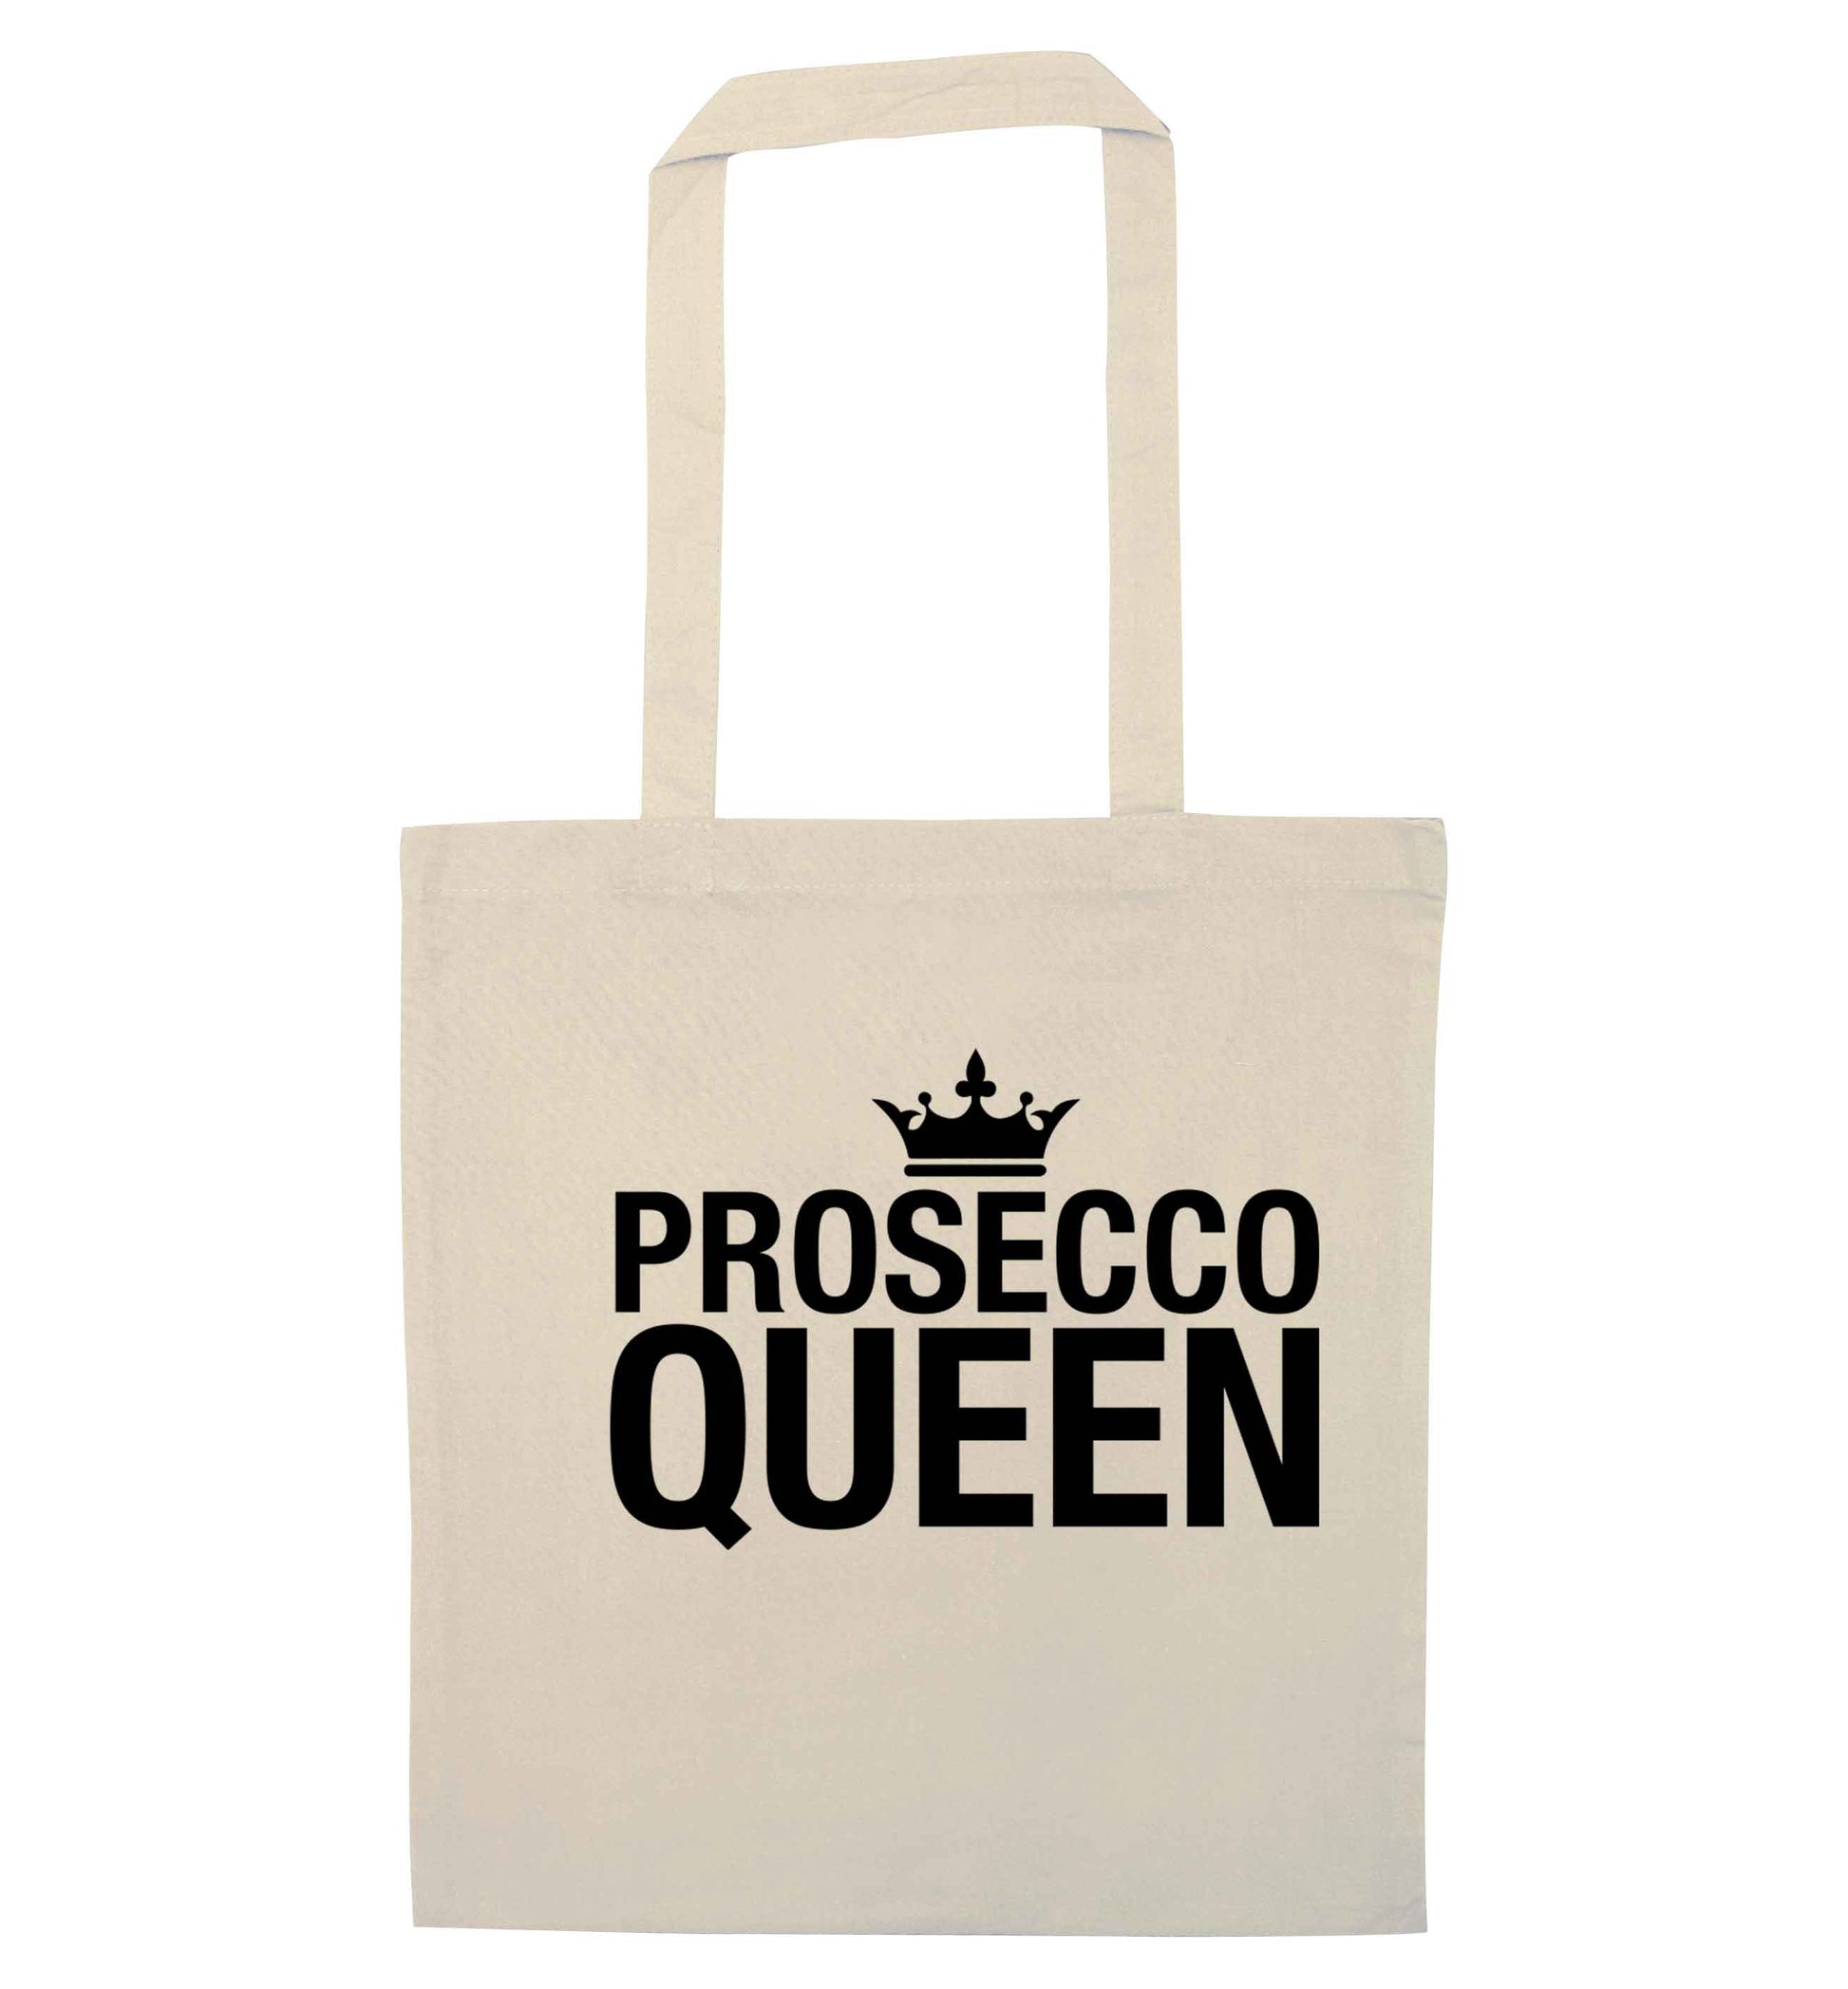 Prosecco queen natural tote bag